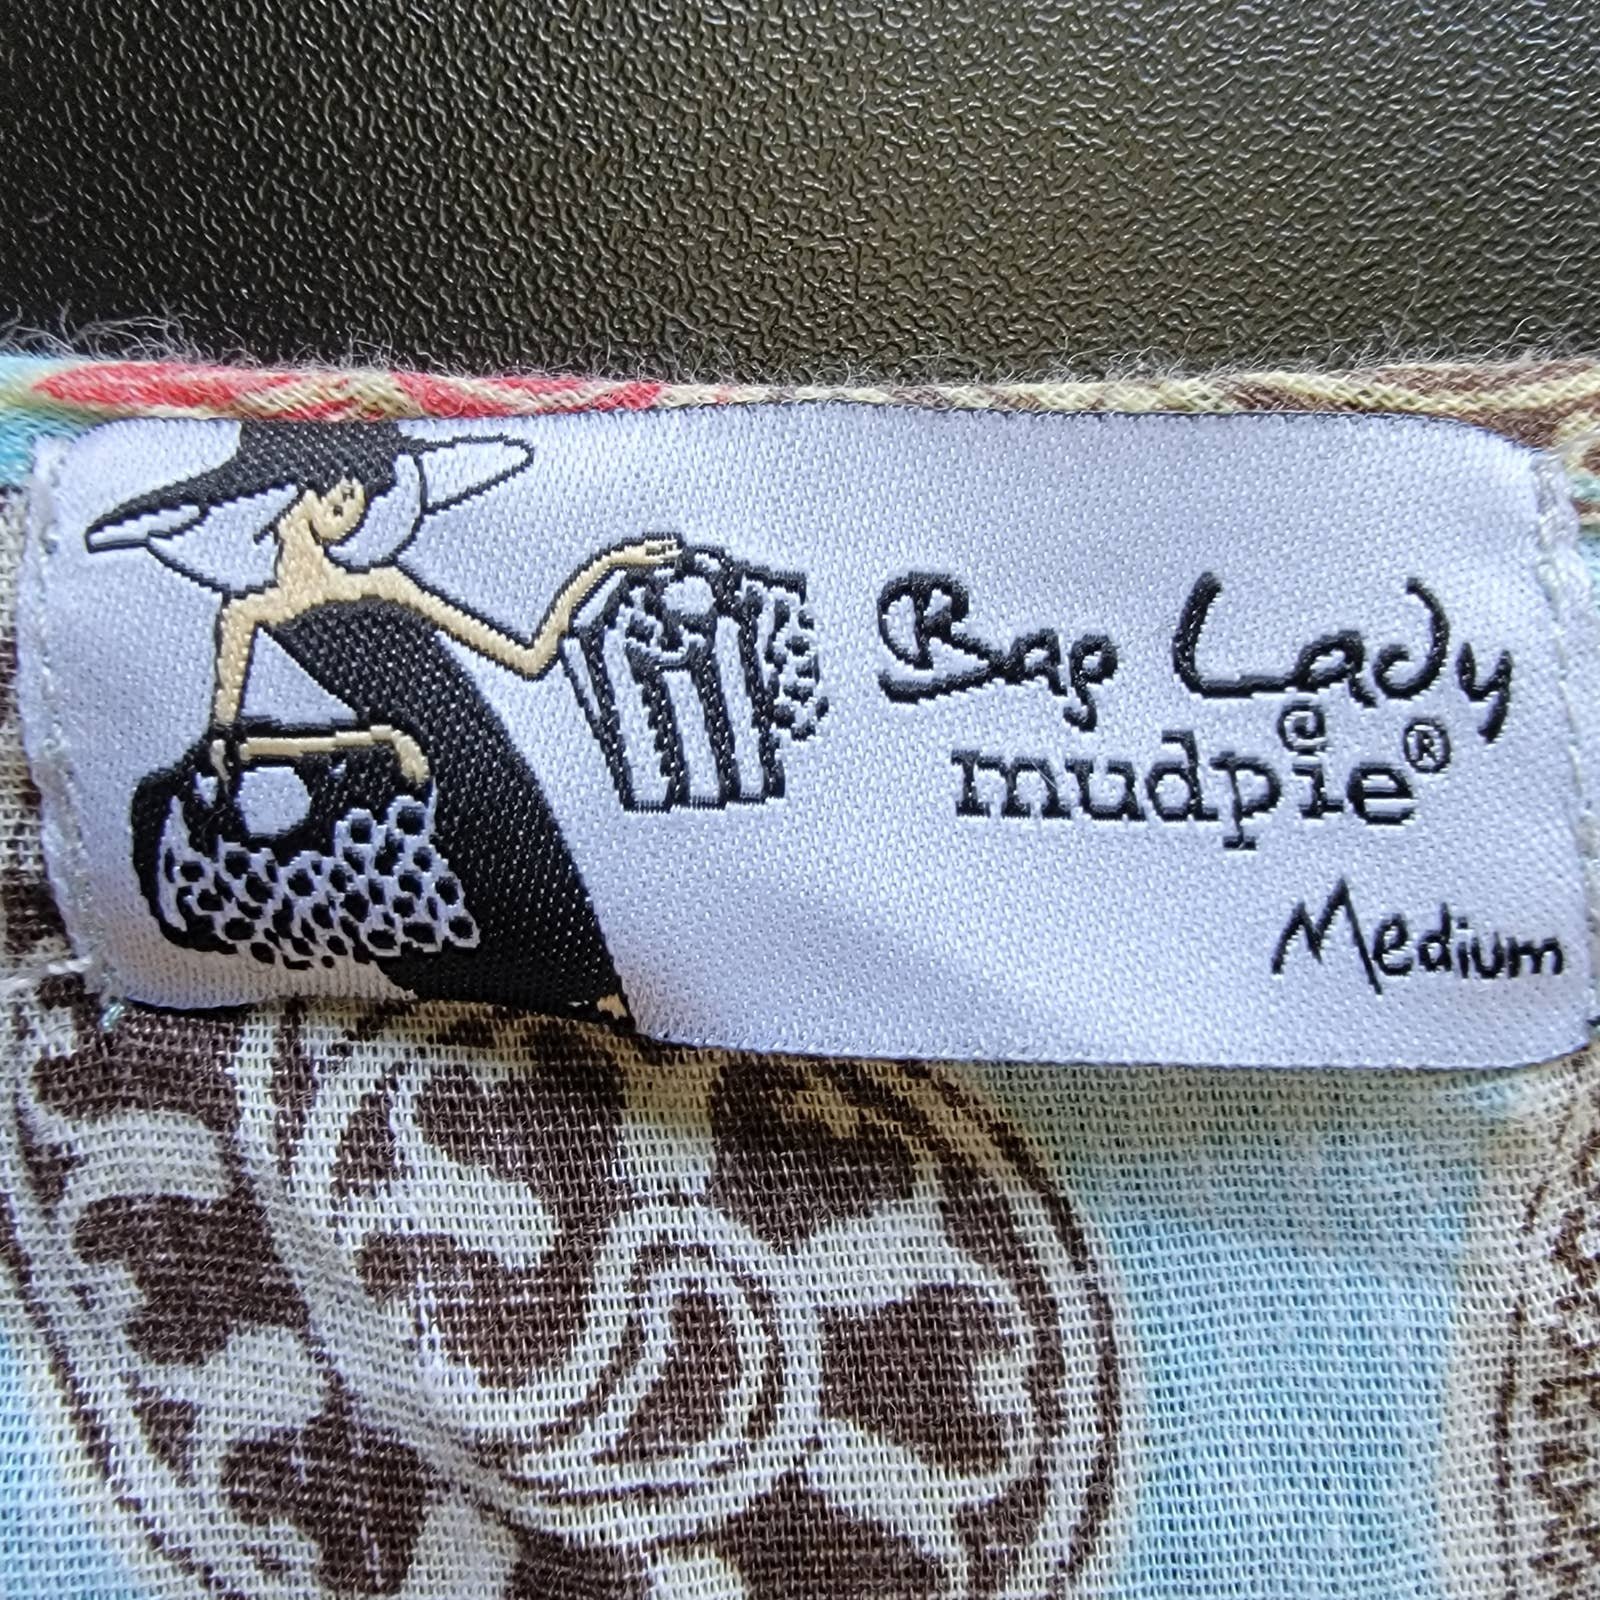 High quality Bag Lady Mud Pie Floral Paisley Boho 100% Linen Beach Cover Up Women´s Medium m1GoDfh5F Cheap